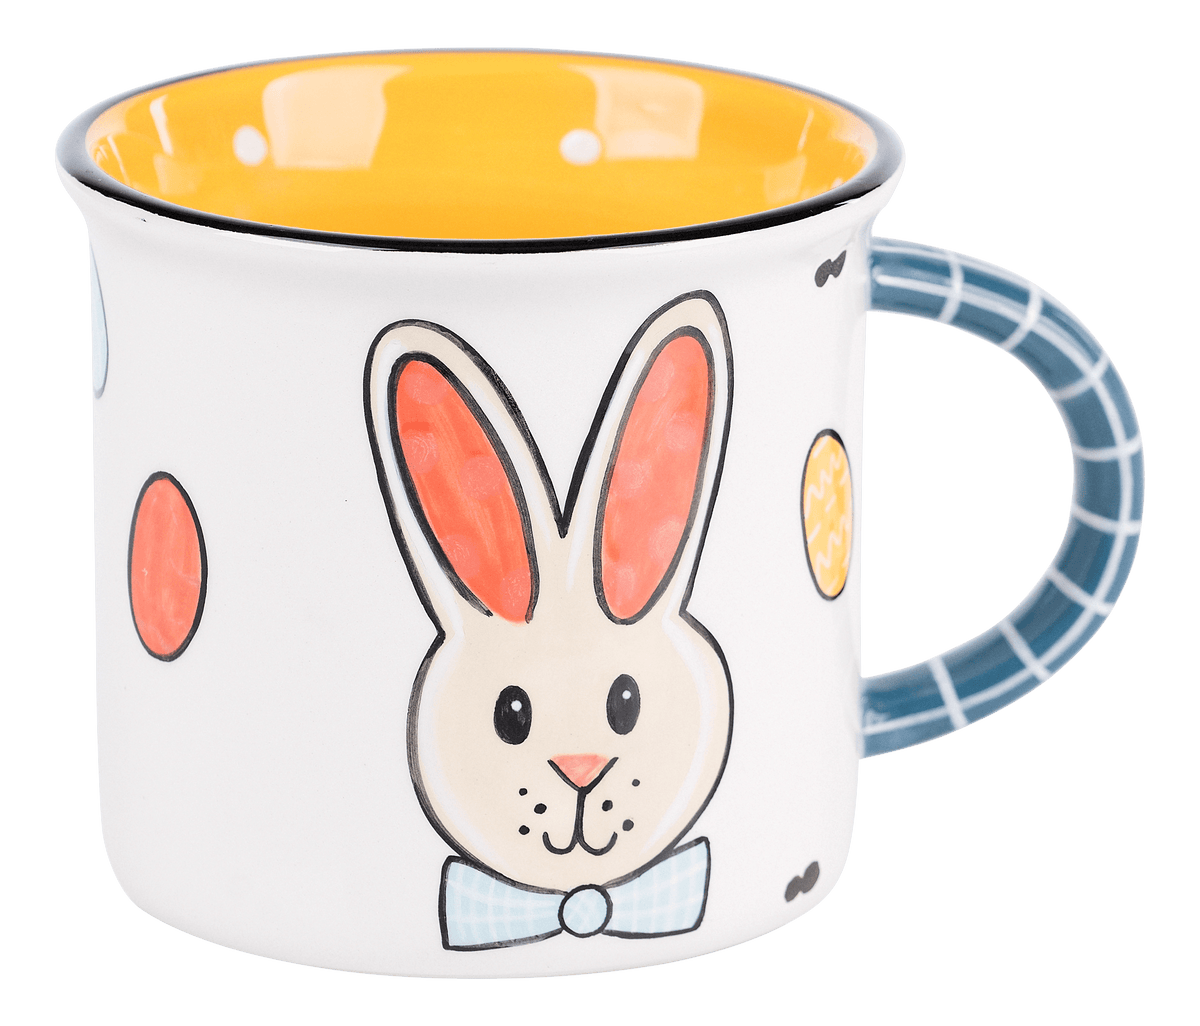 Some Bunny Love You Campfire Mug - GLORY HAUS 